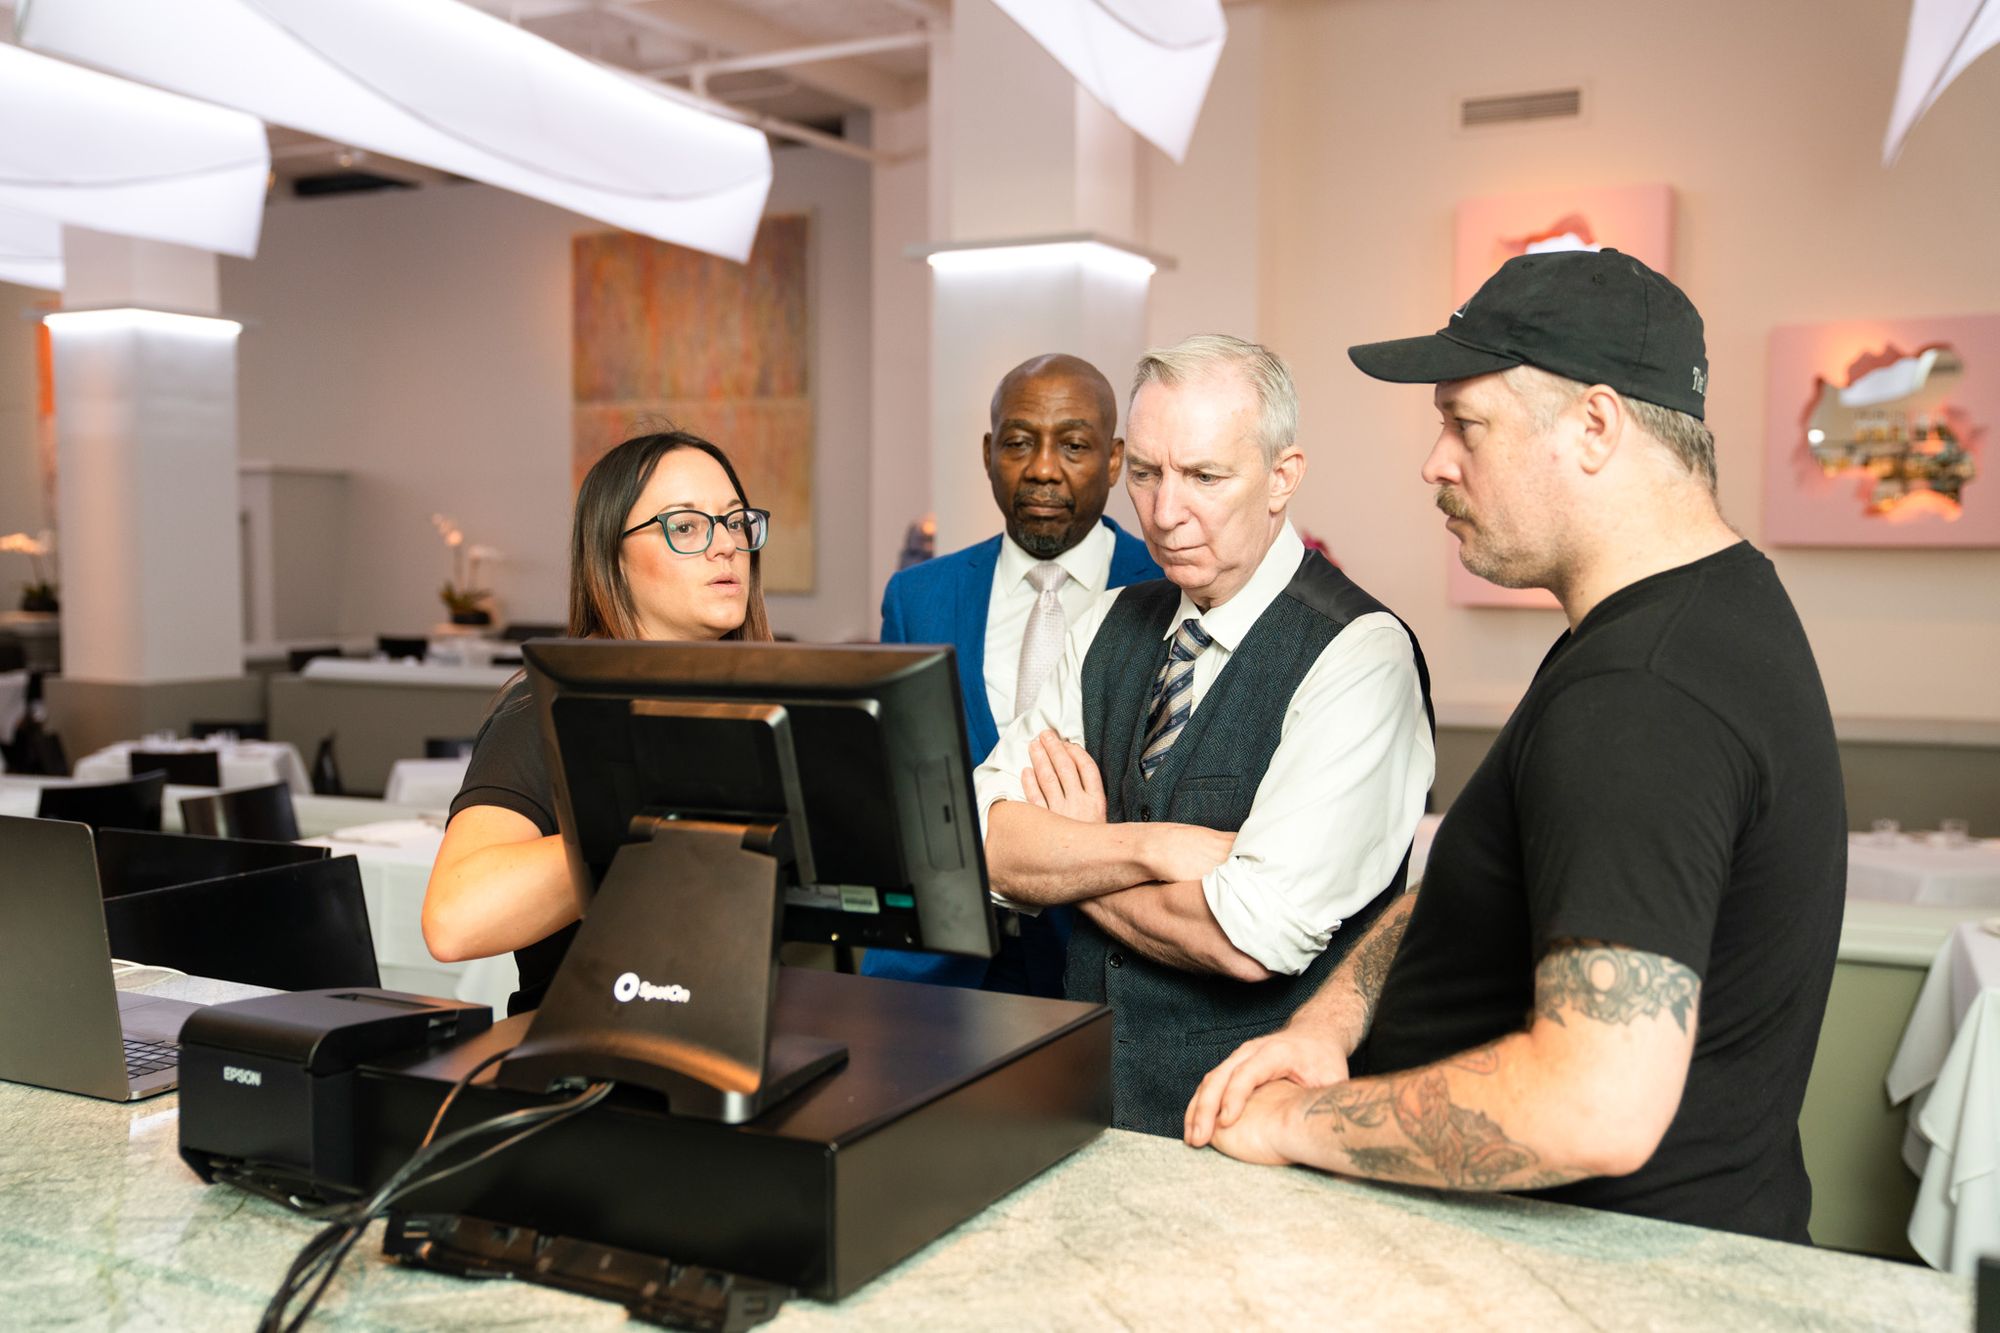 A SpotOn POS specialist trains the restaurant staff at Gotham restaurant in New York